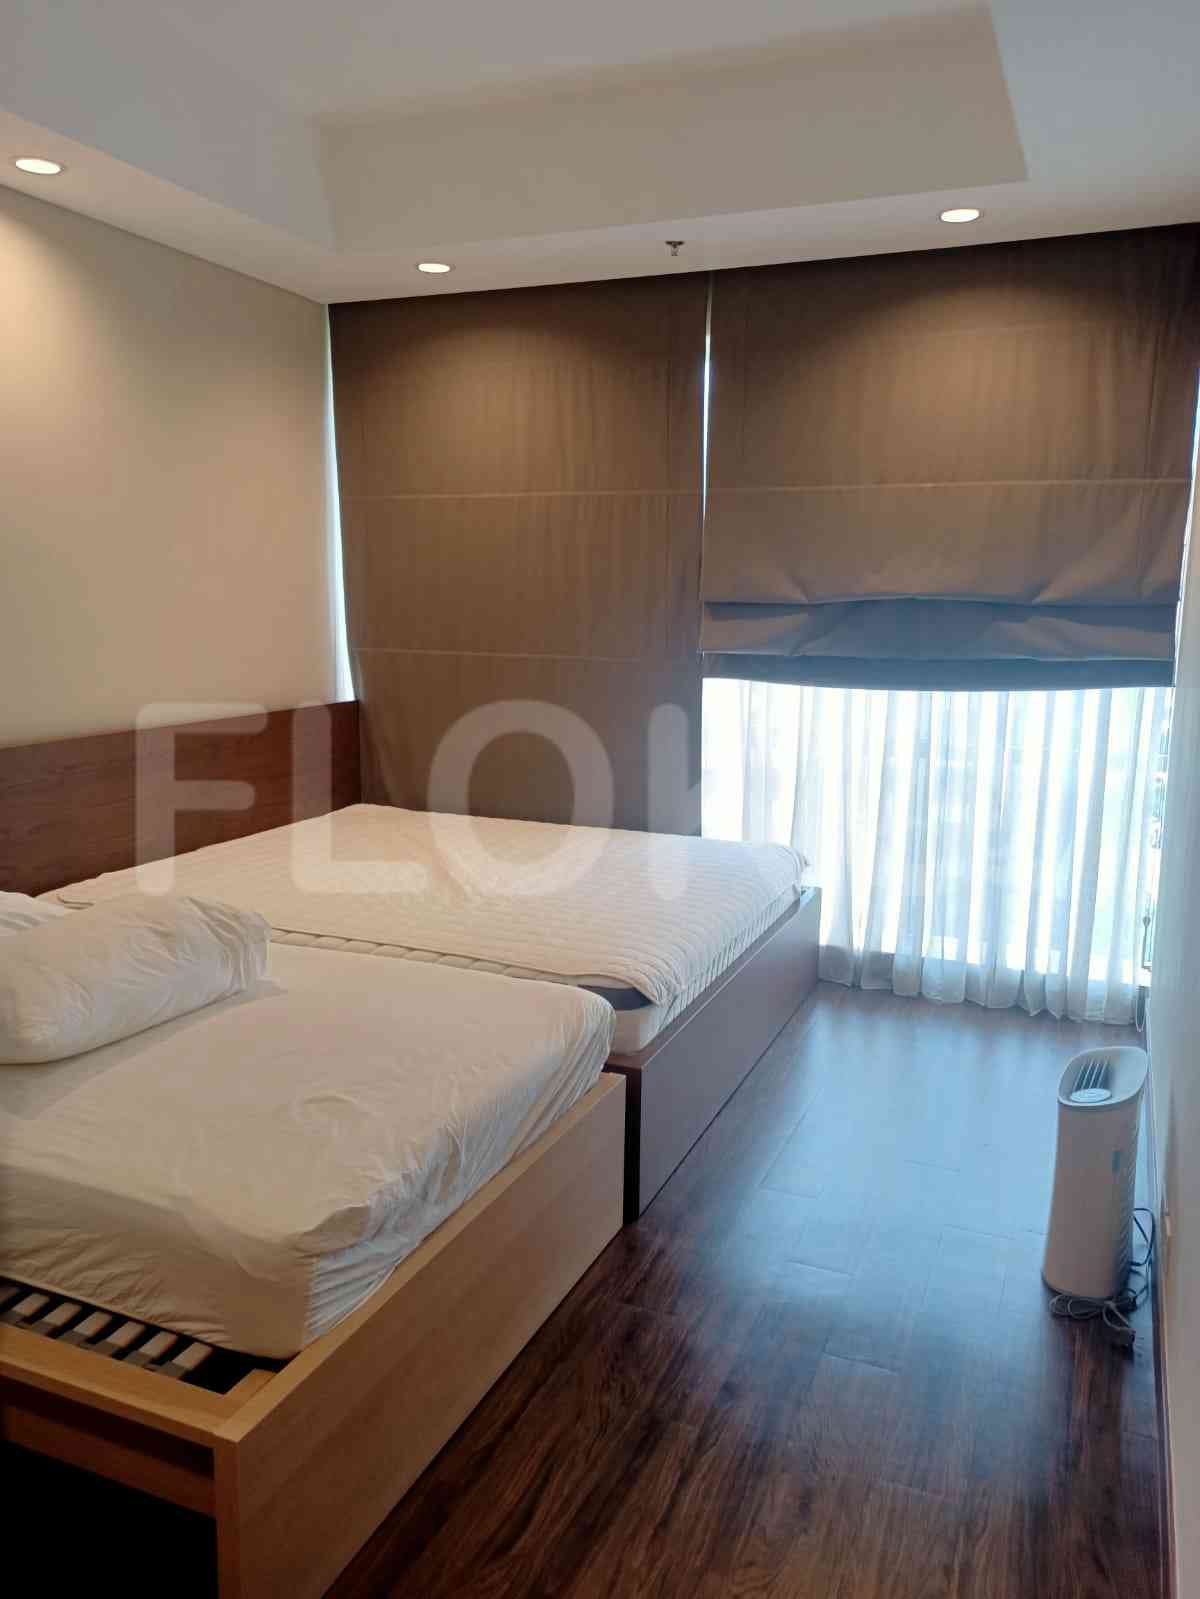 3 Bedroom on 7th Floor for Rent in Apartemen Branz Simatupang - ftb893 3